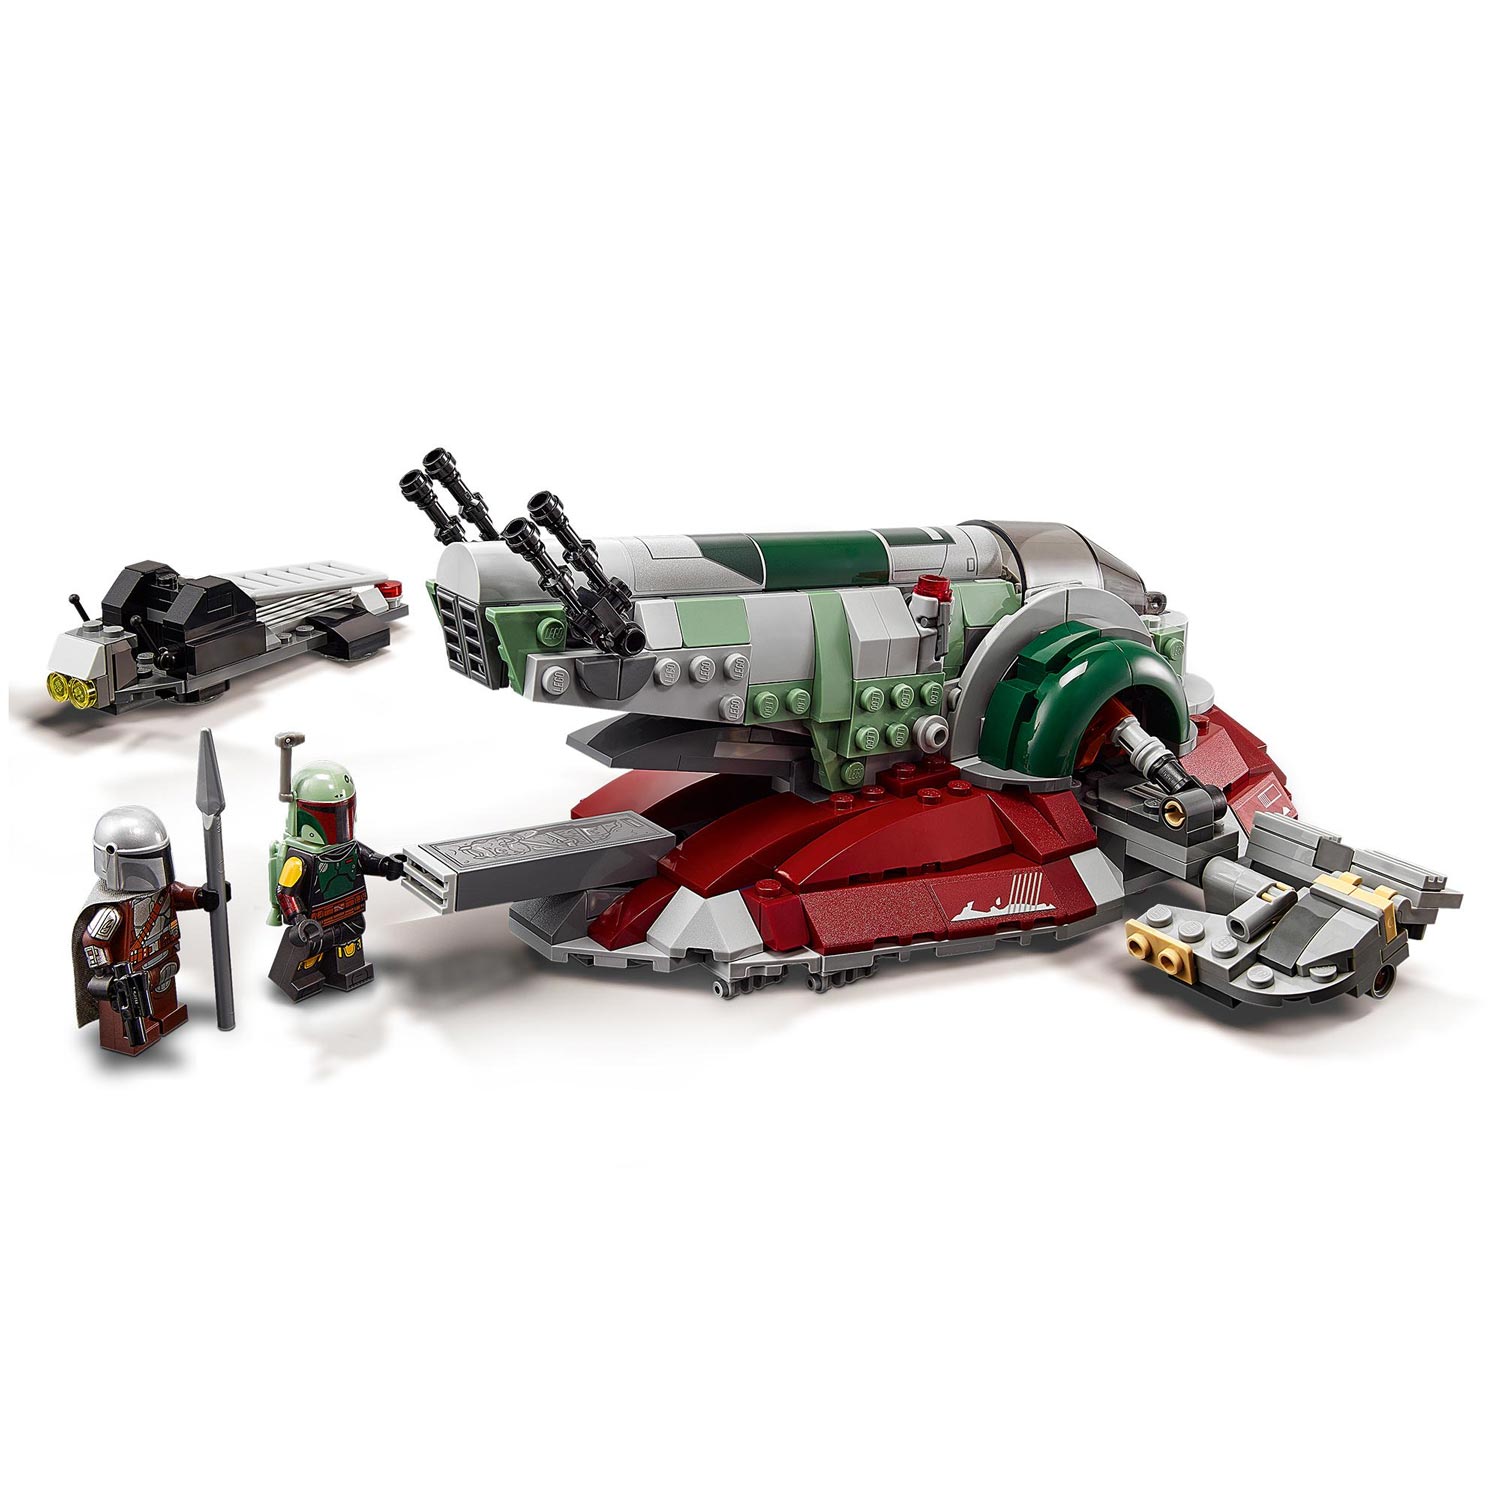 LEGO Star Wars 75312 Boba Fett's Sterrenschip